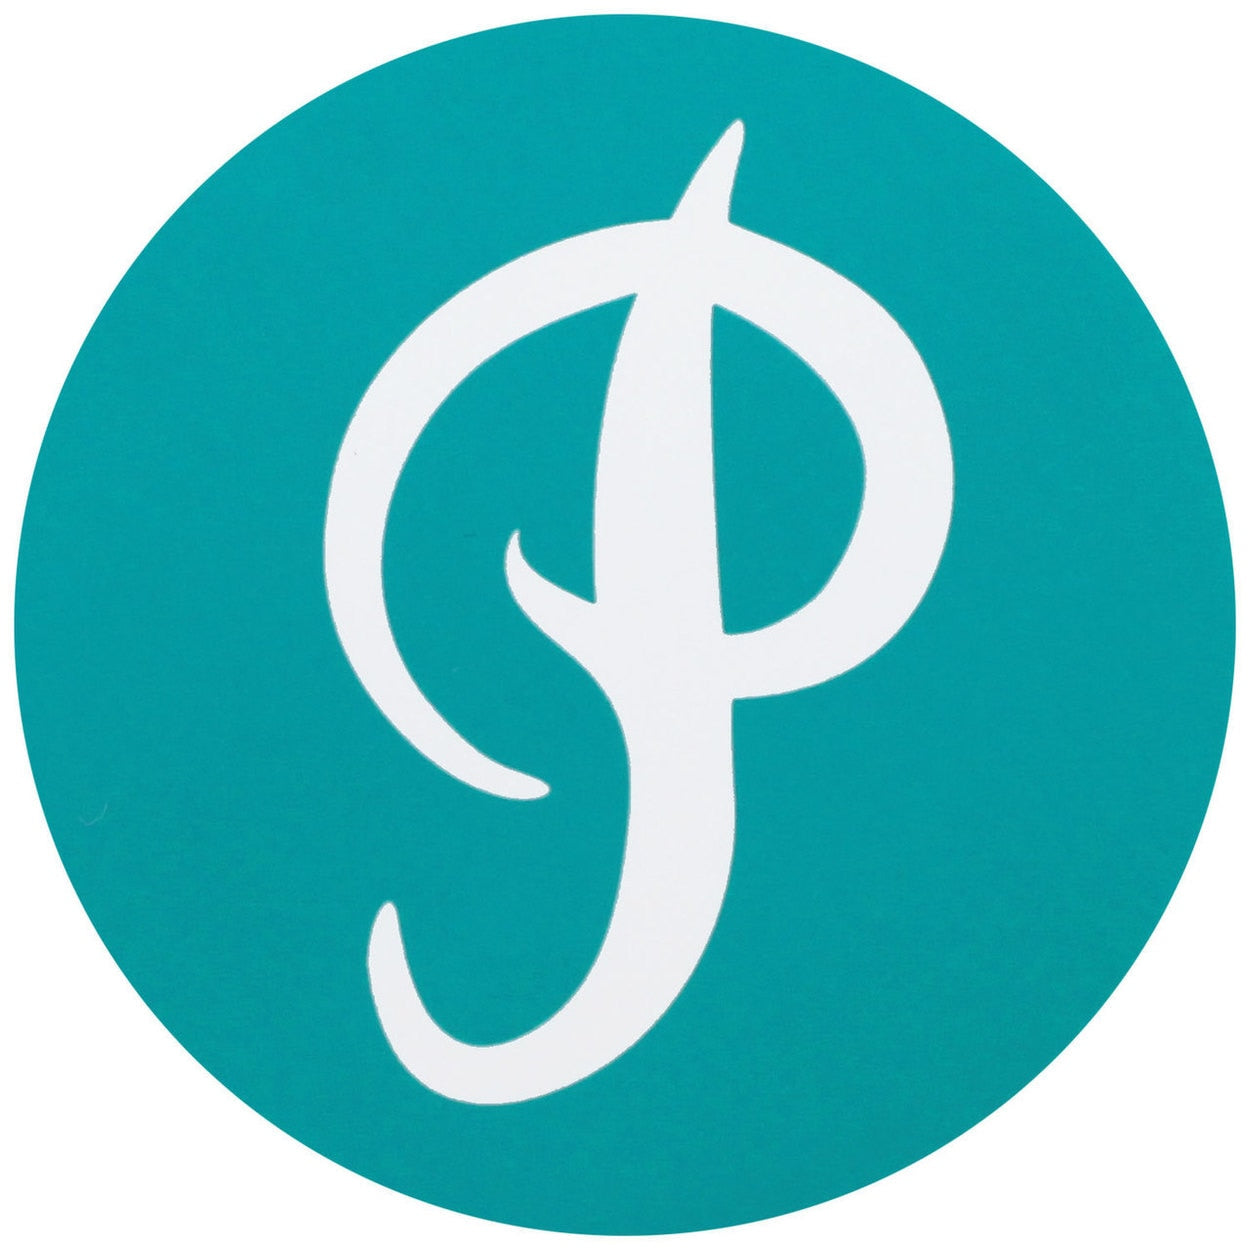 Primitive Circle "P" Logo Sticker - Teal